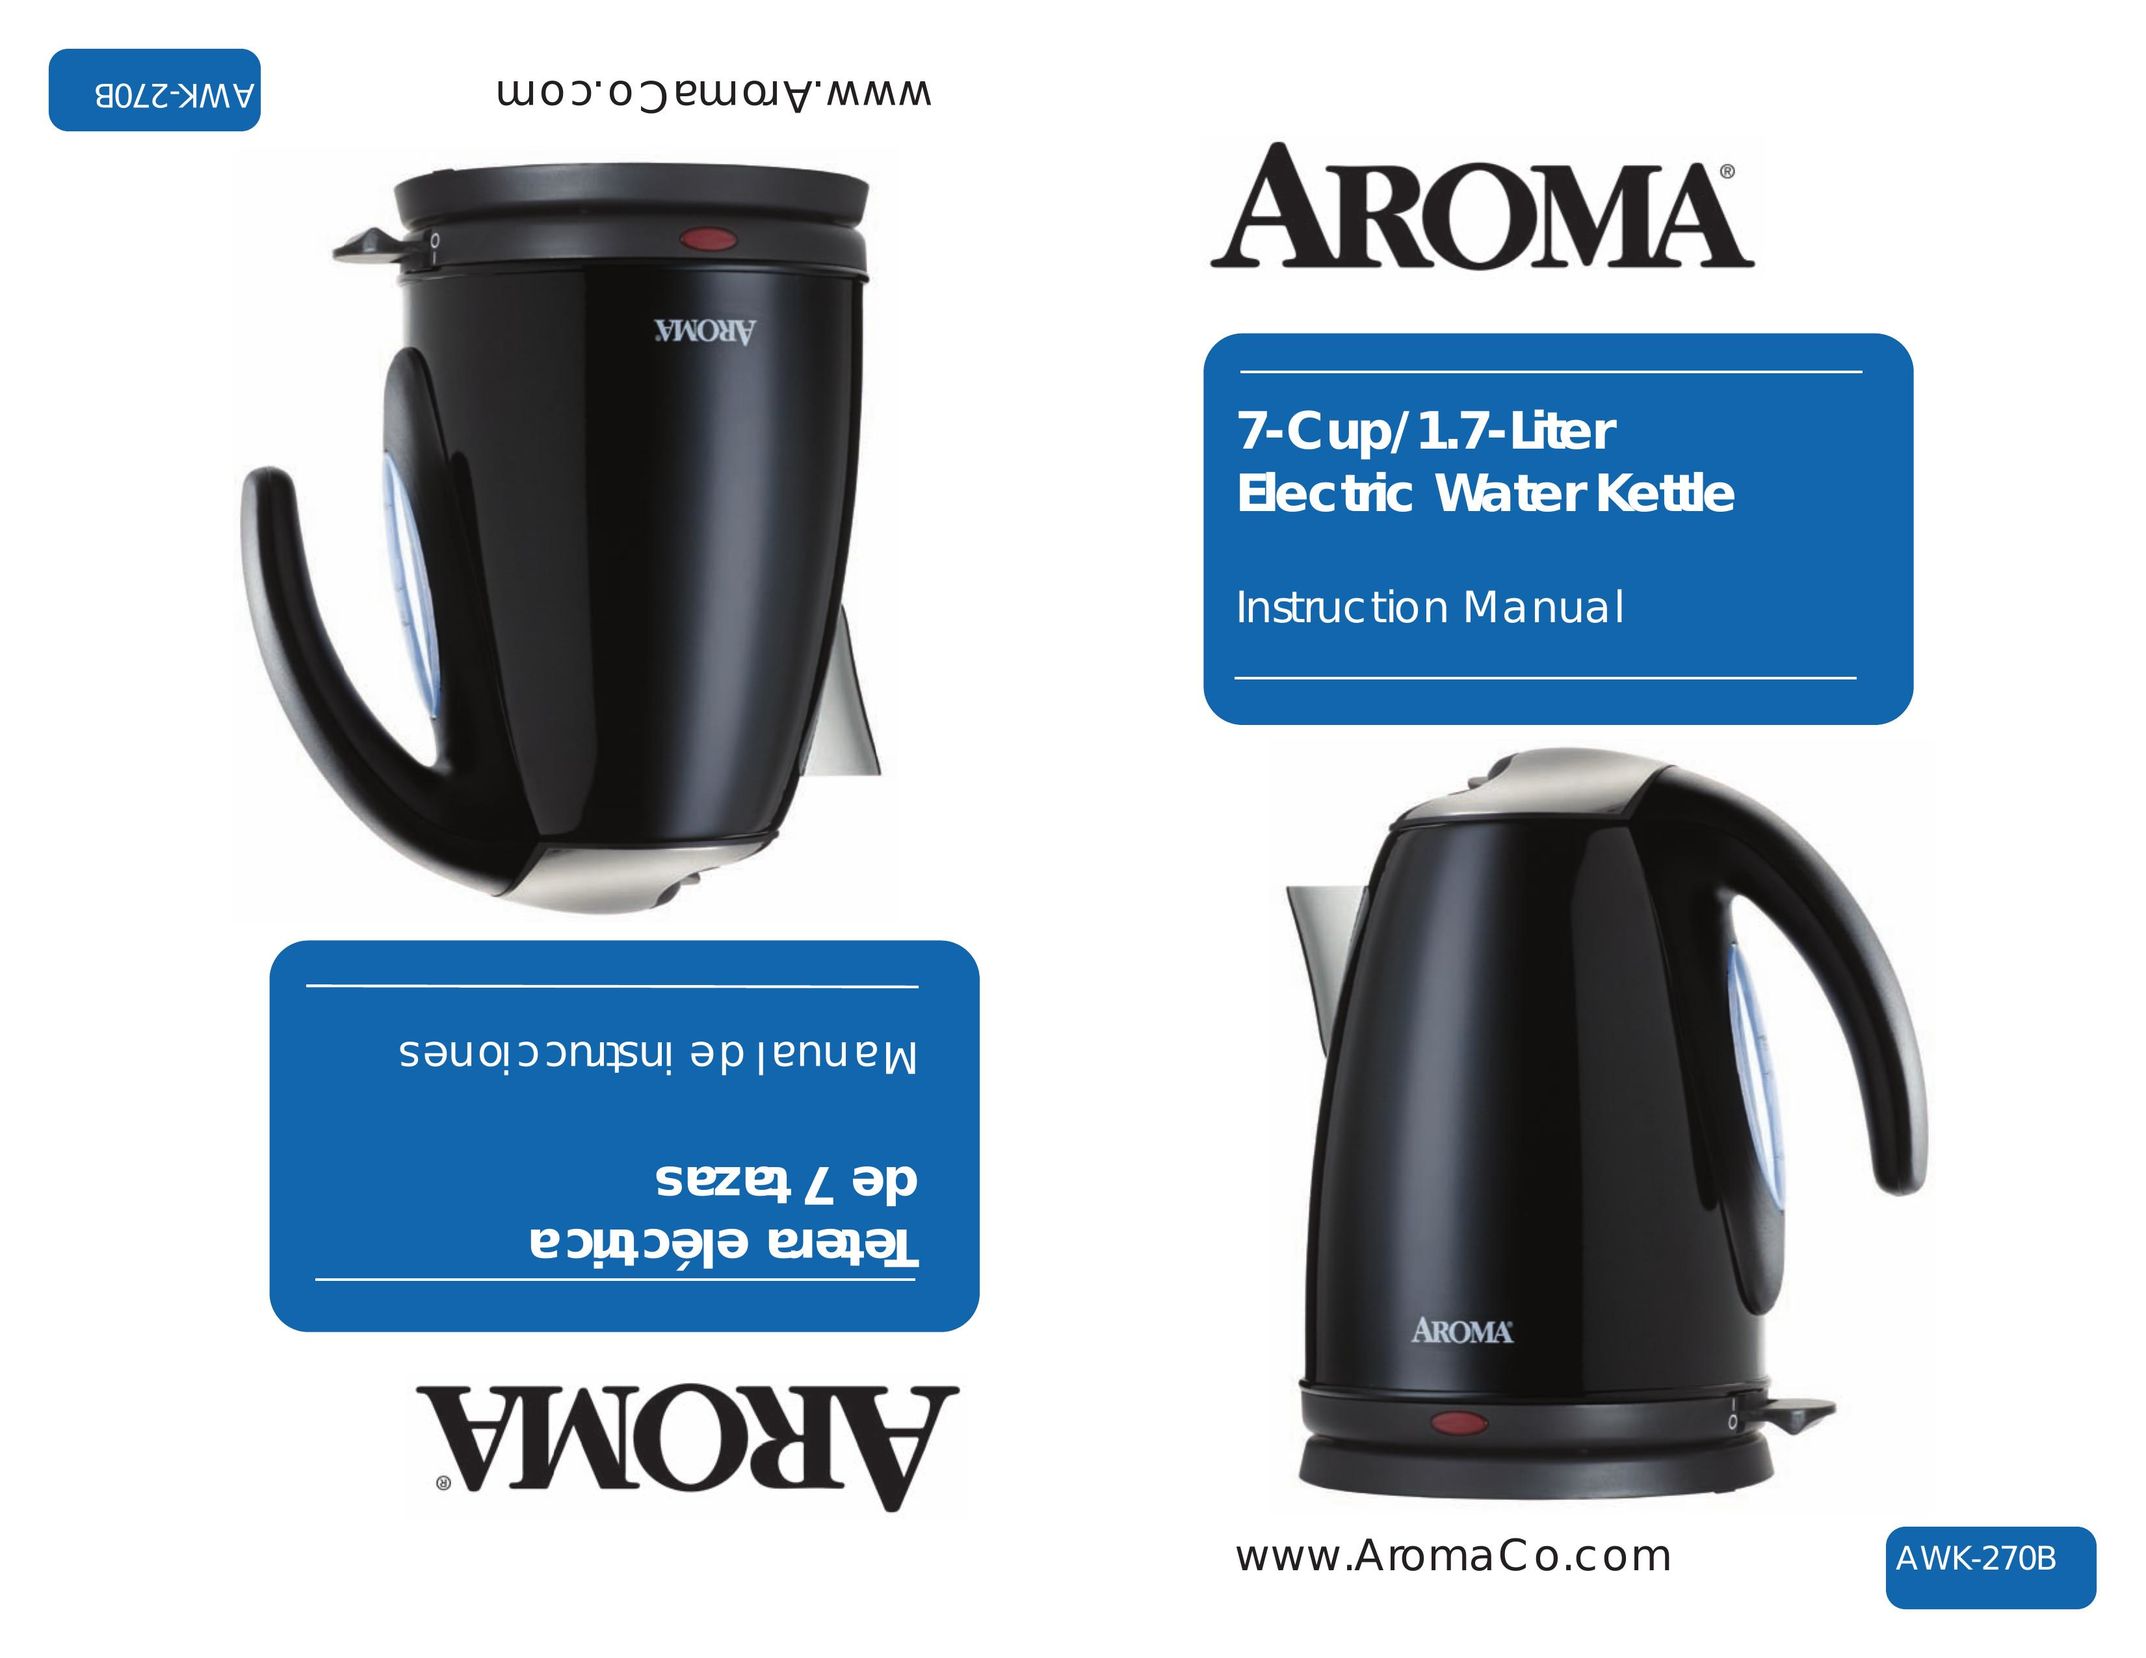 Aroma AWK-270B Hot Beverage Maker User Manual